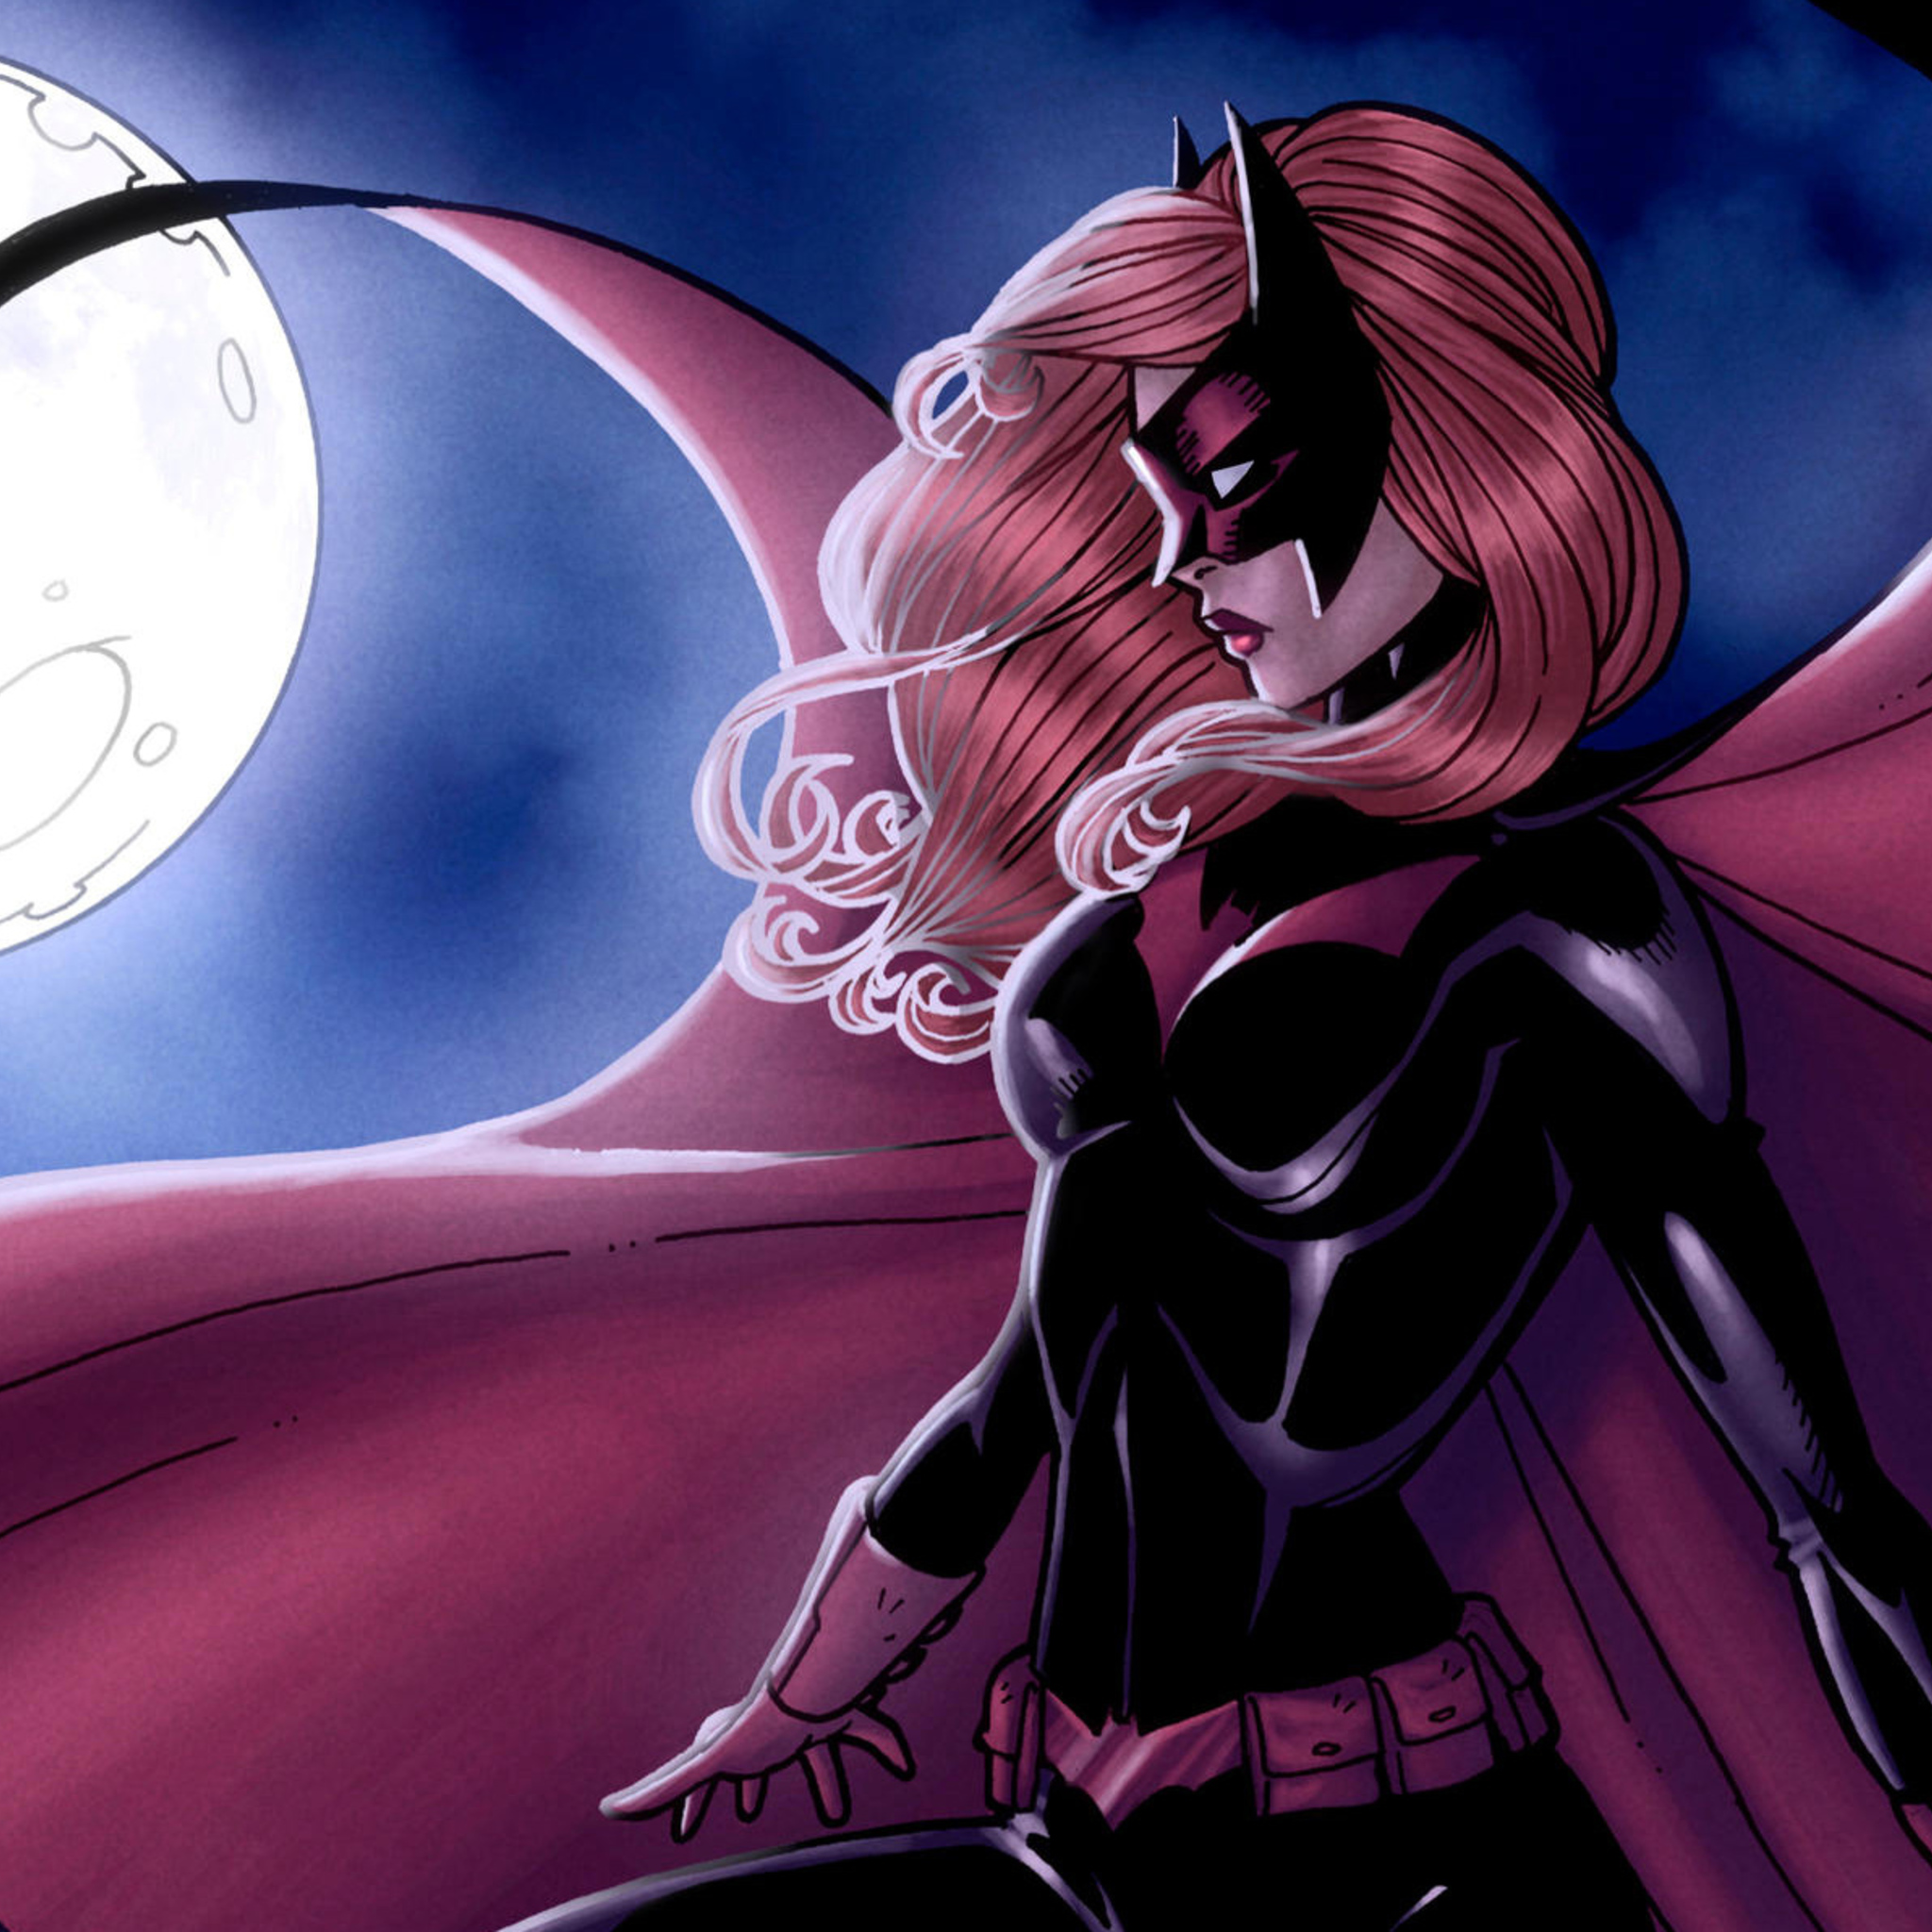 Batwoman Art 2019 iPad Air HD 4k Wallpaper, Image